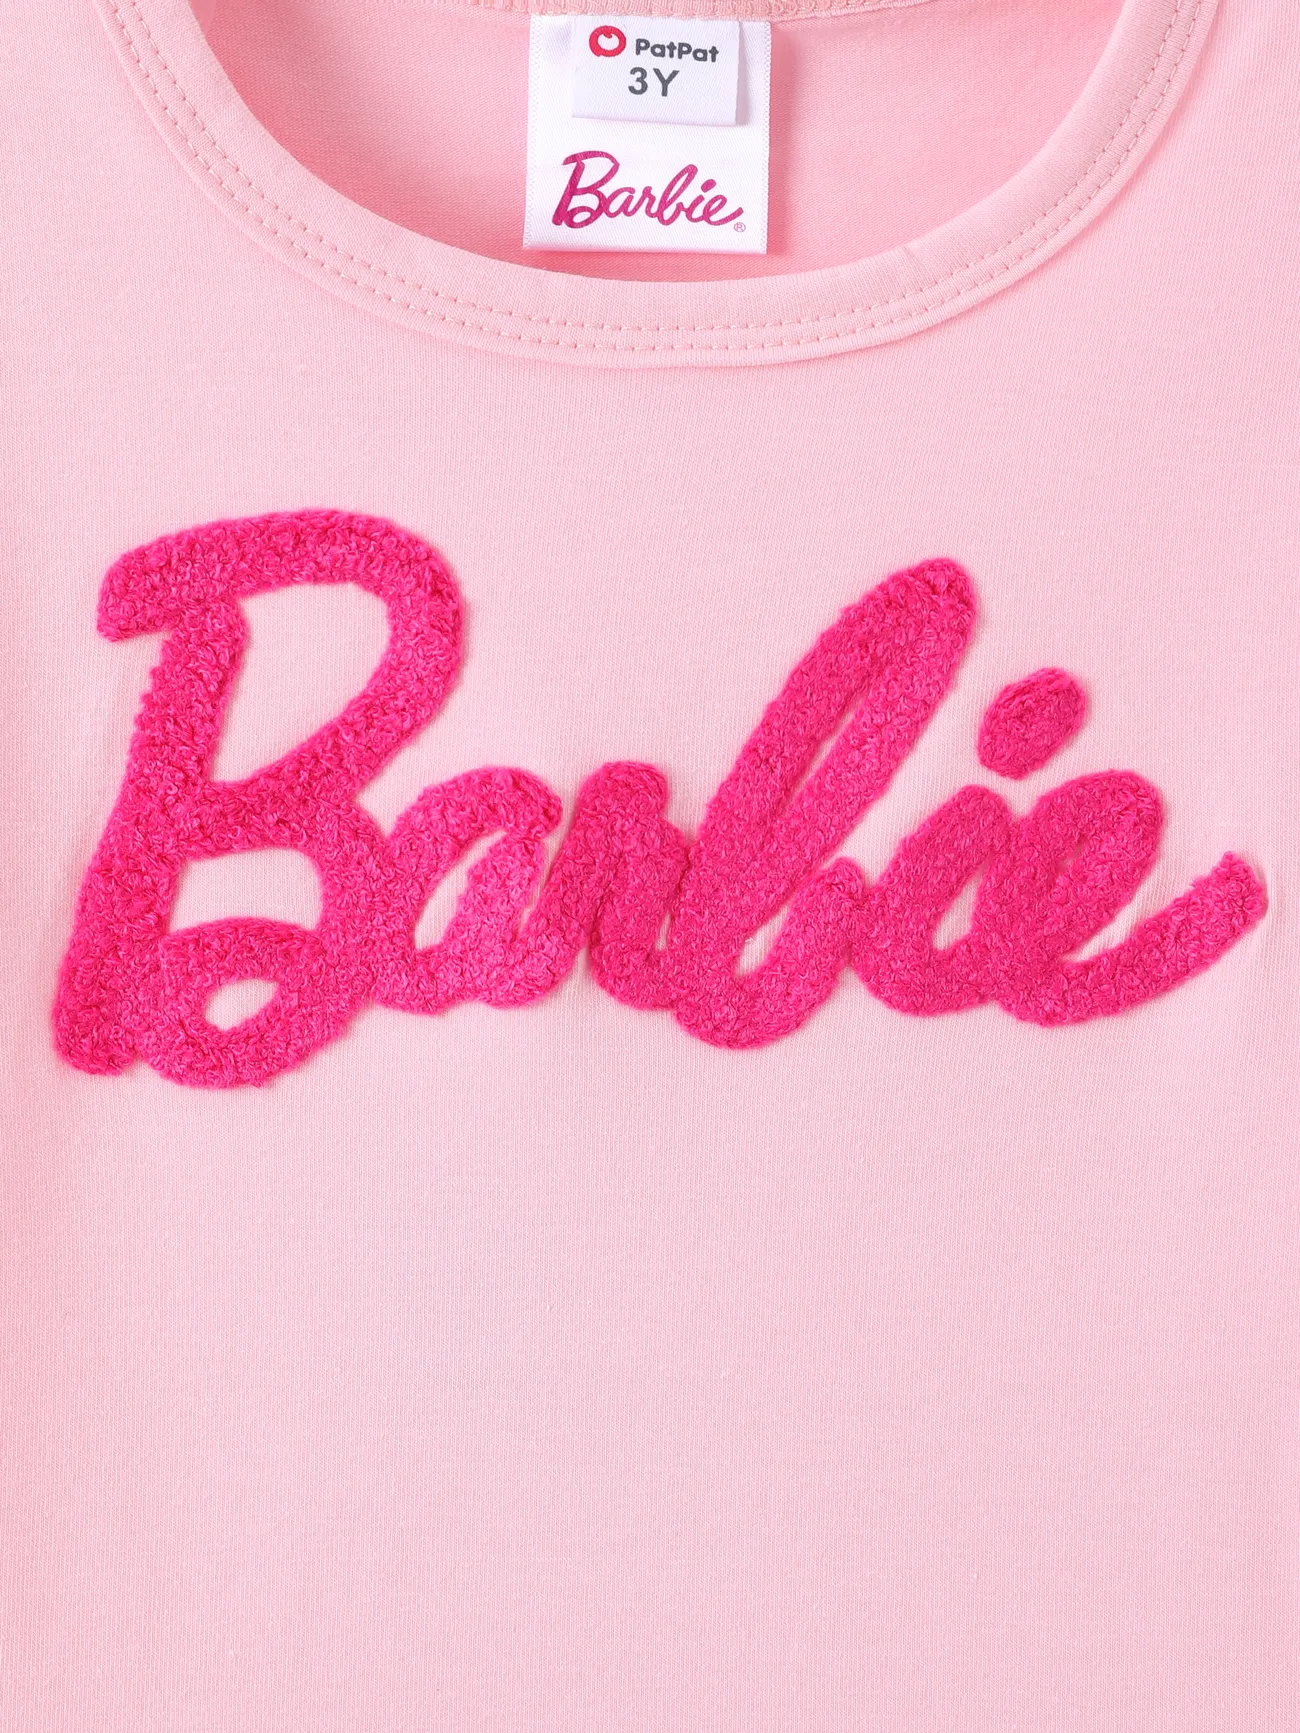 Barbie Toddler/Kid Girl Letter Embroidered Short-sleeve Cotton Tee Light Pink big image 1